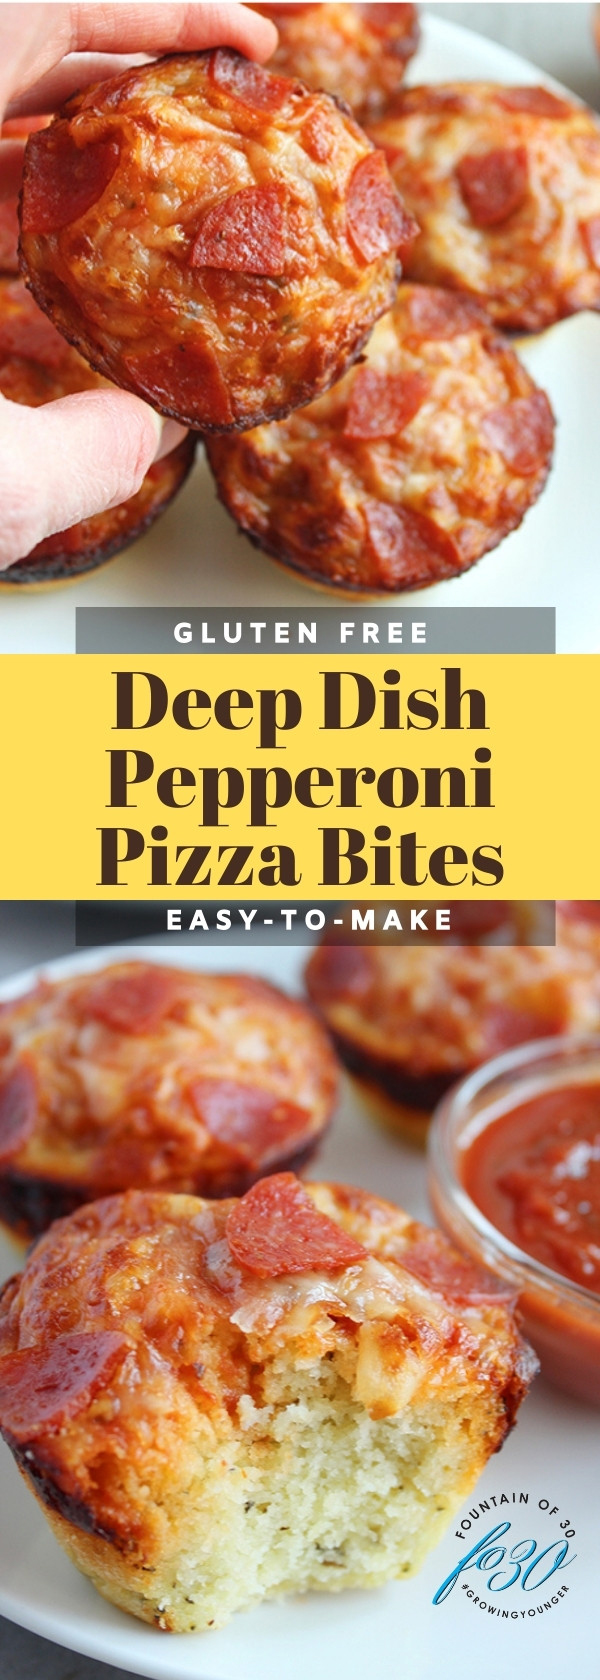 deep dish pepperoni pizza bites fountainof30 